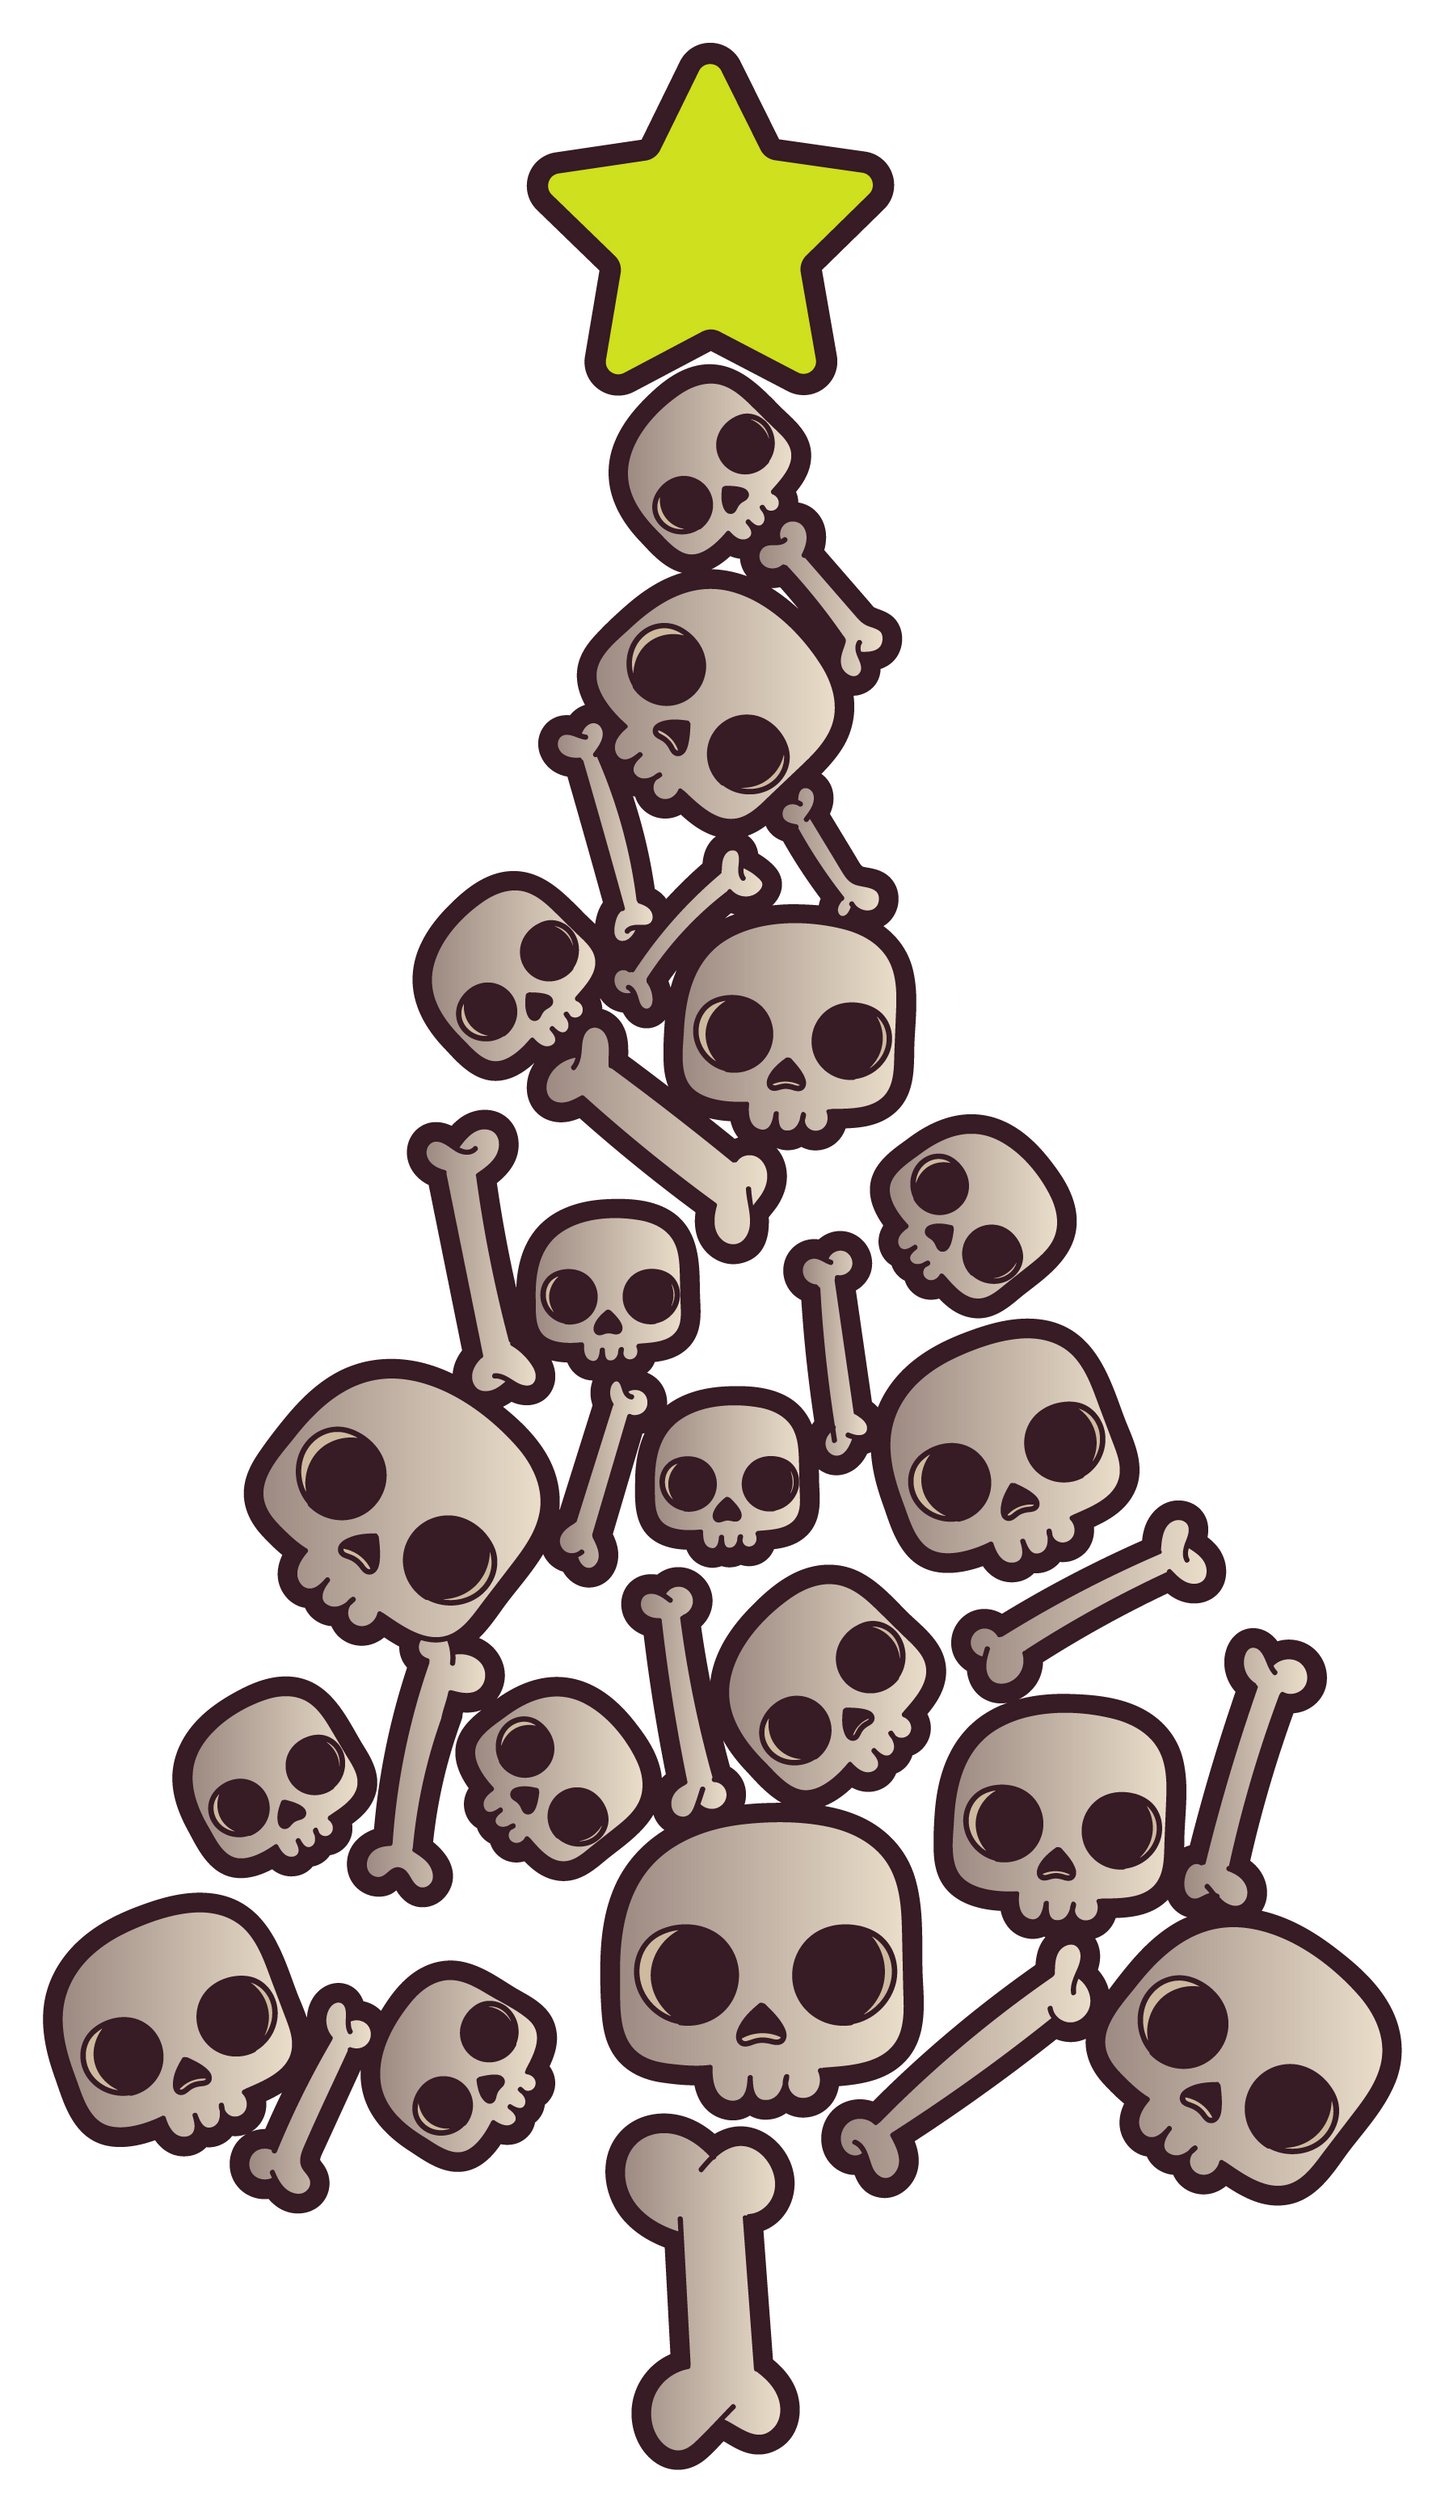 Stickers - Skull Christmas Tree Sticker, Christmas Stickers